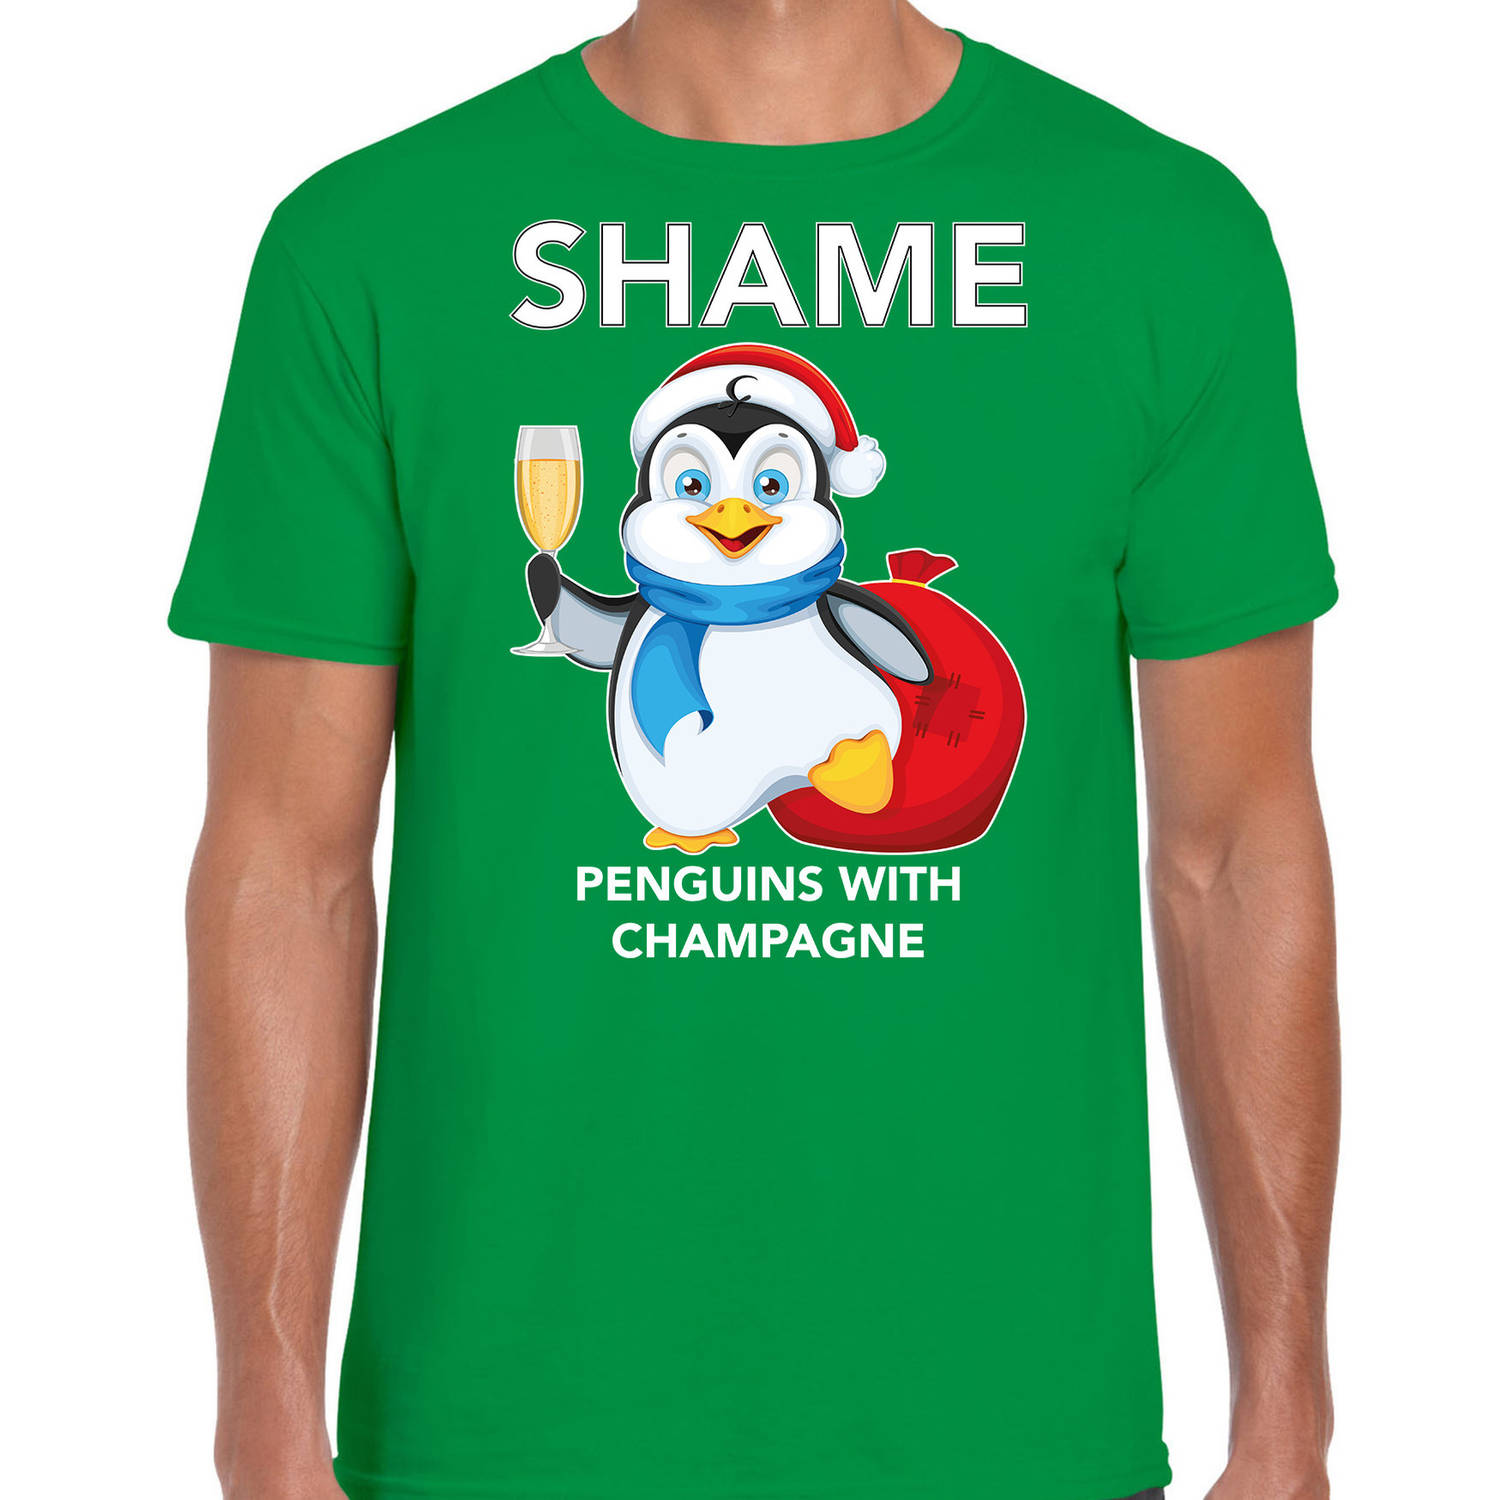 Groen Kerst shirt/ Kerstkleding met pinguin Shame penguins with champagne voor heren S - kerst t-shirts